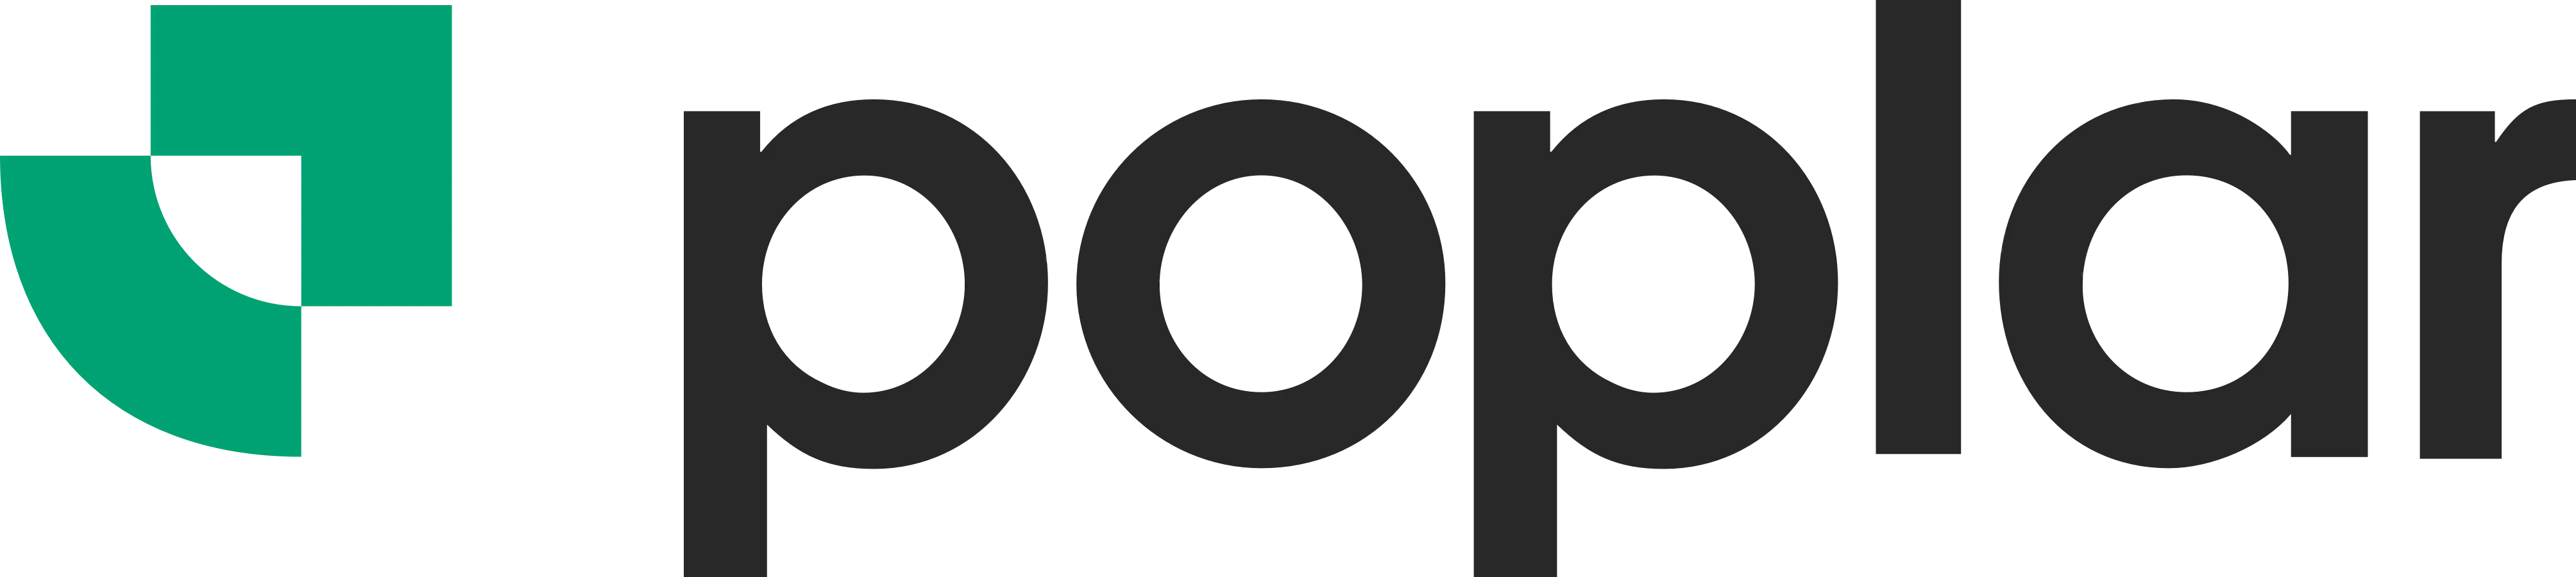 Poplar logo